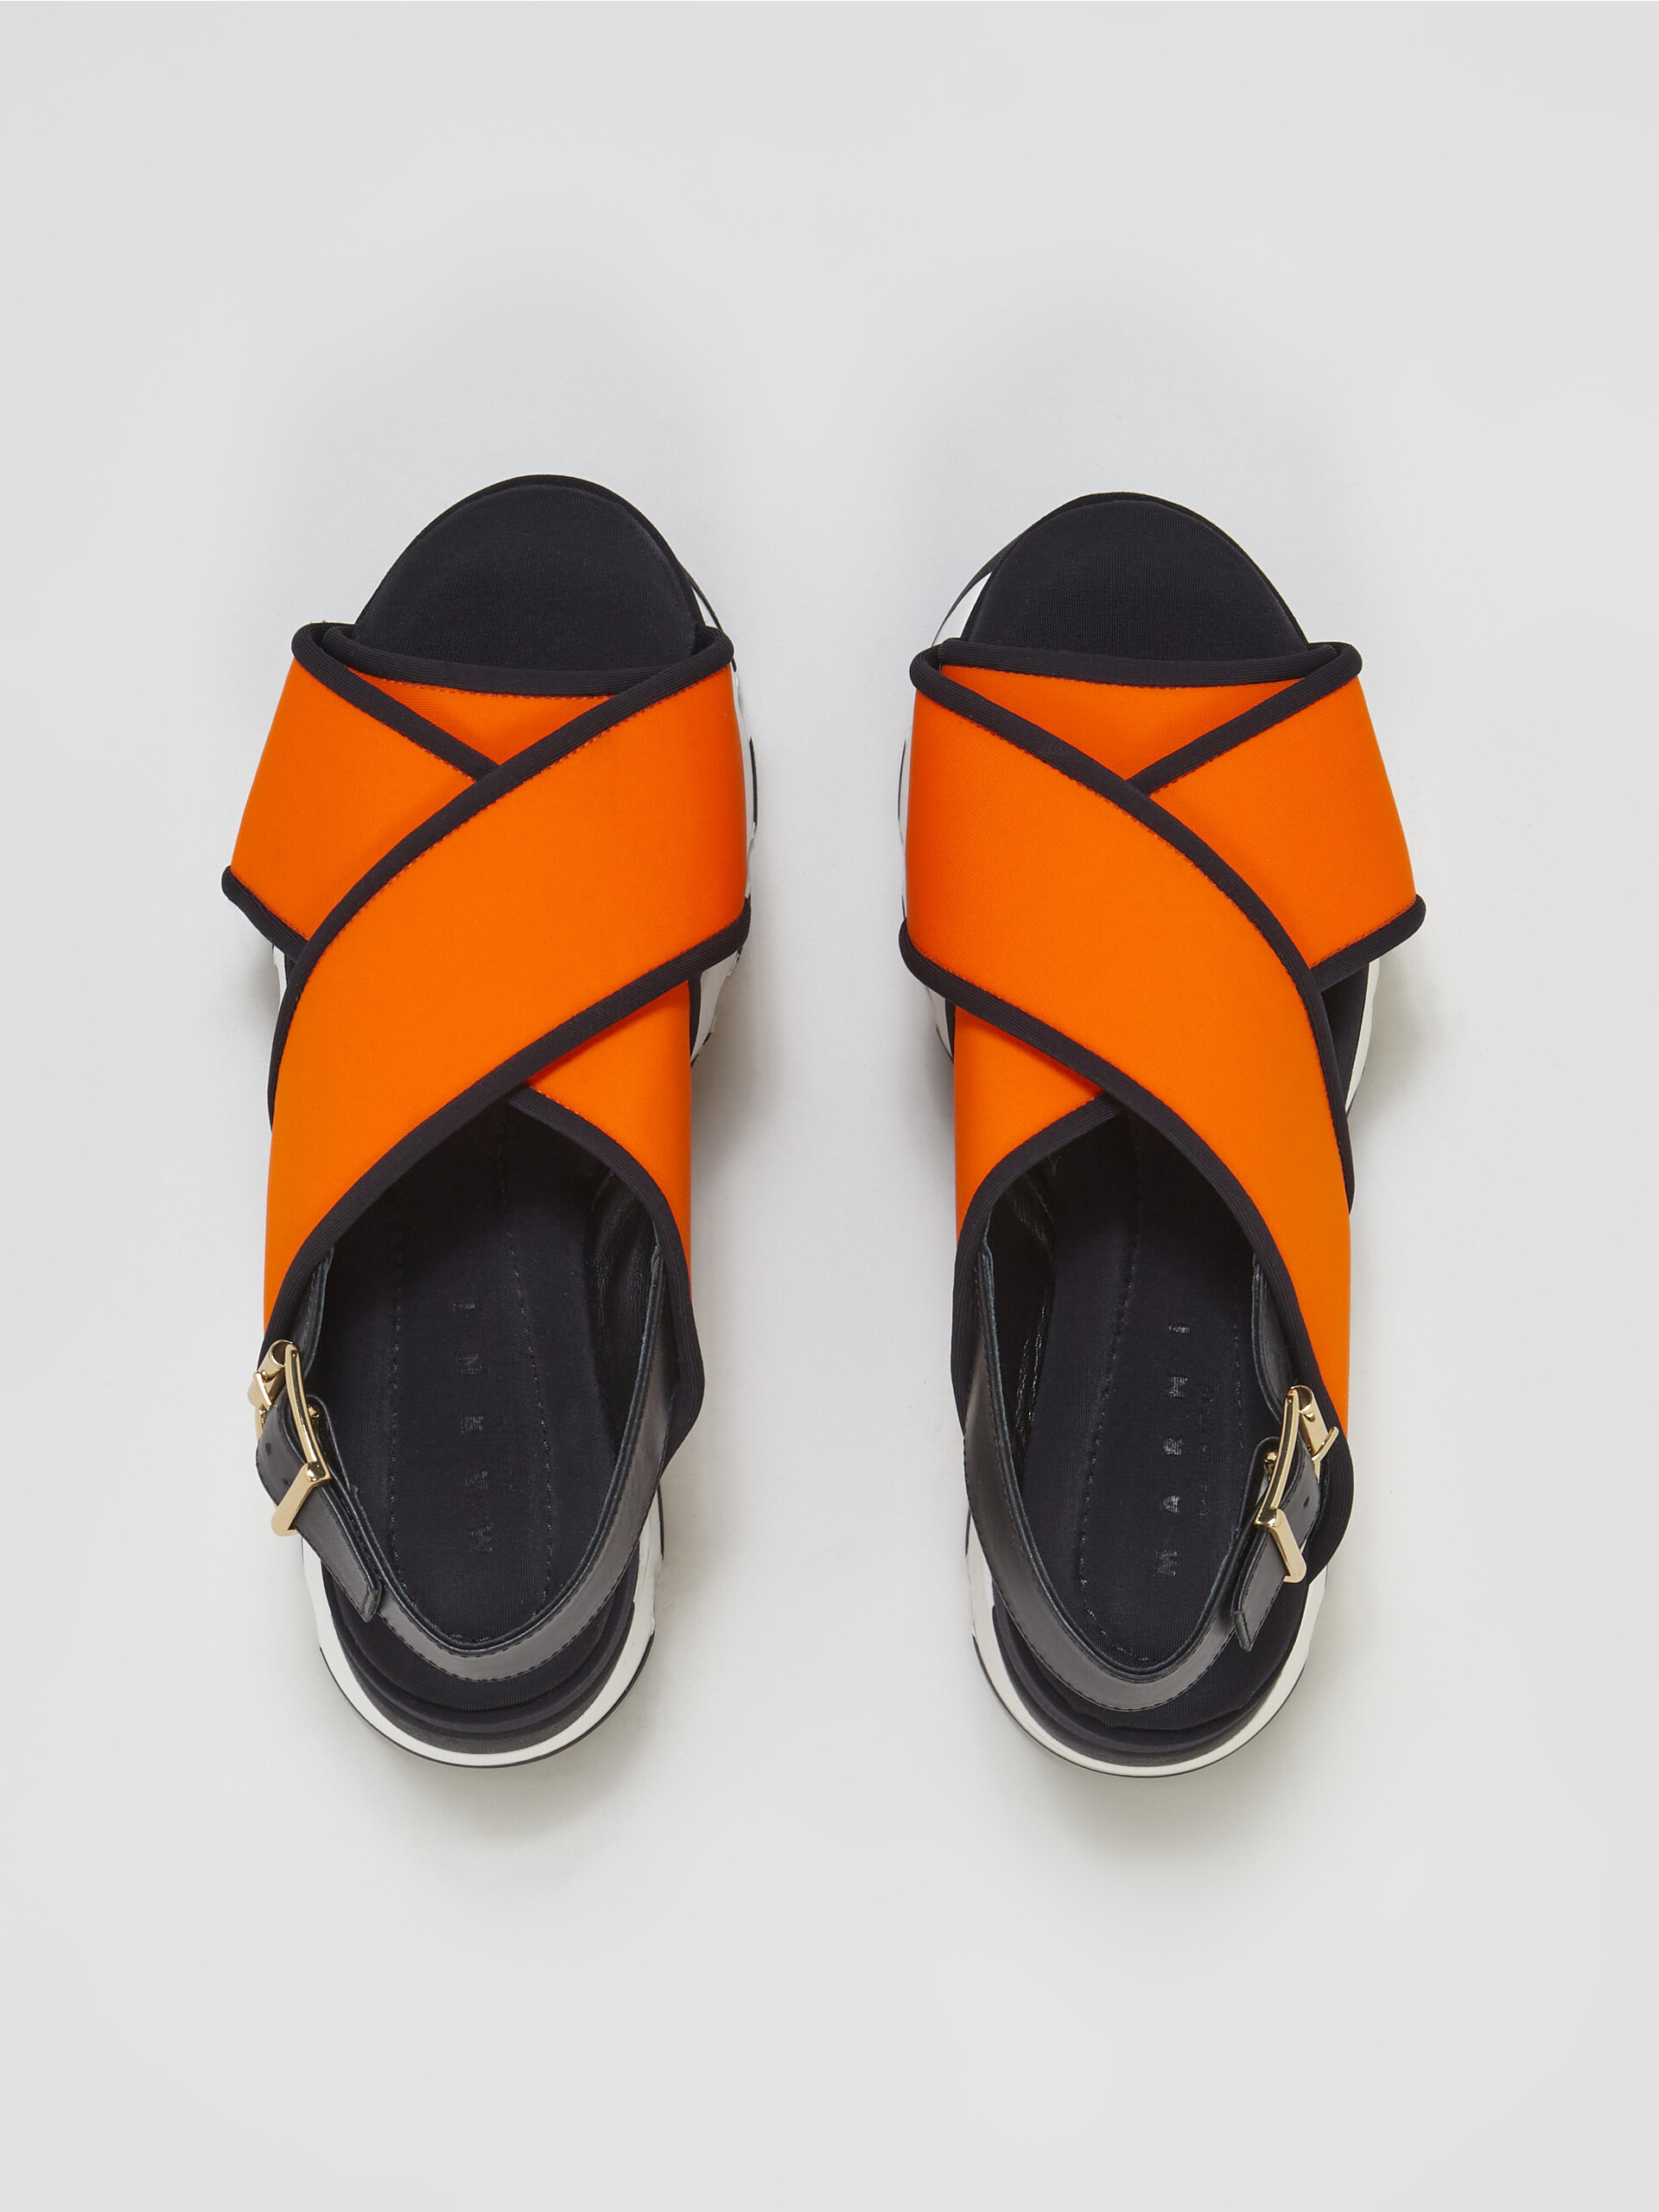 Sandalo zeppa in tessuto tecnico arancio - Sandali - Image 4